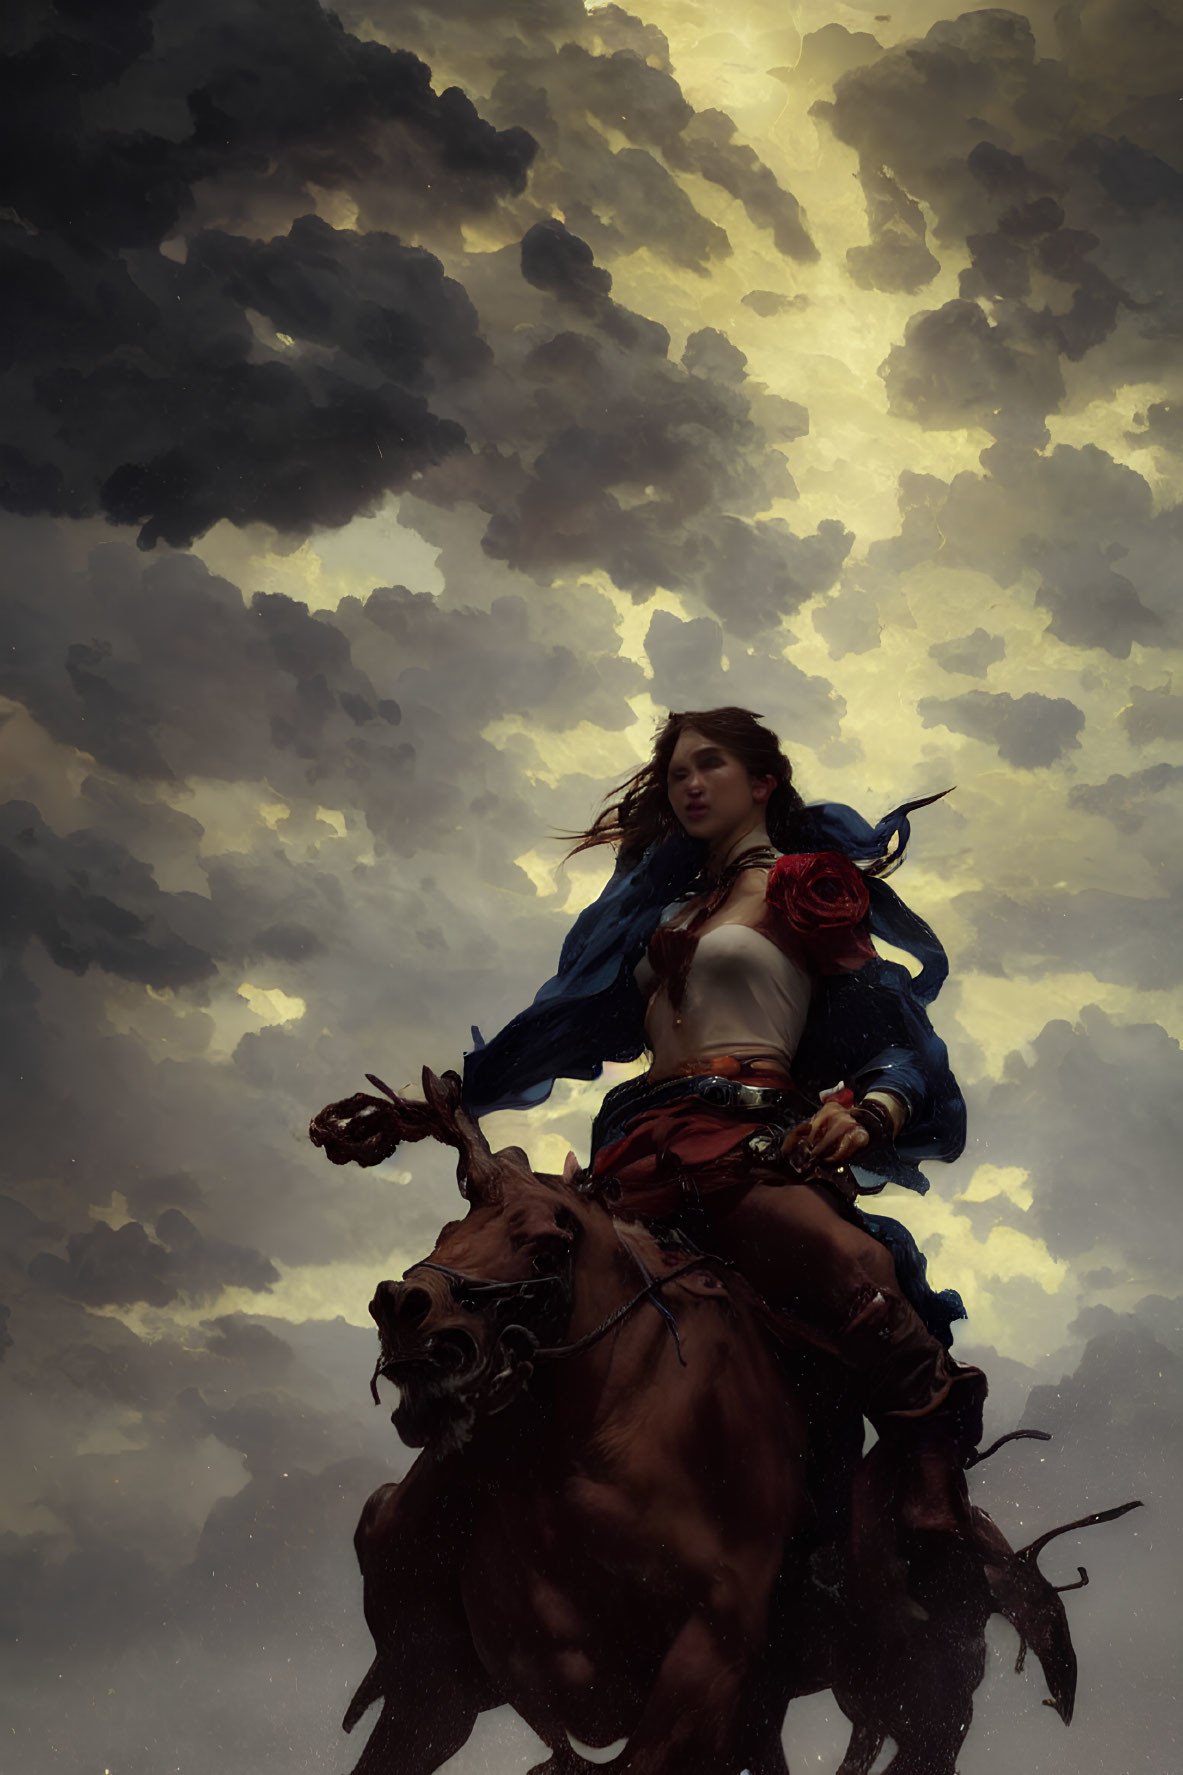 Fantasy-inspired image: Woman riding bull under dramatic sky